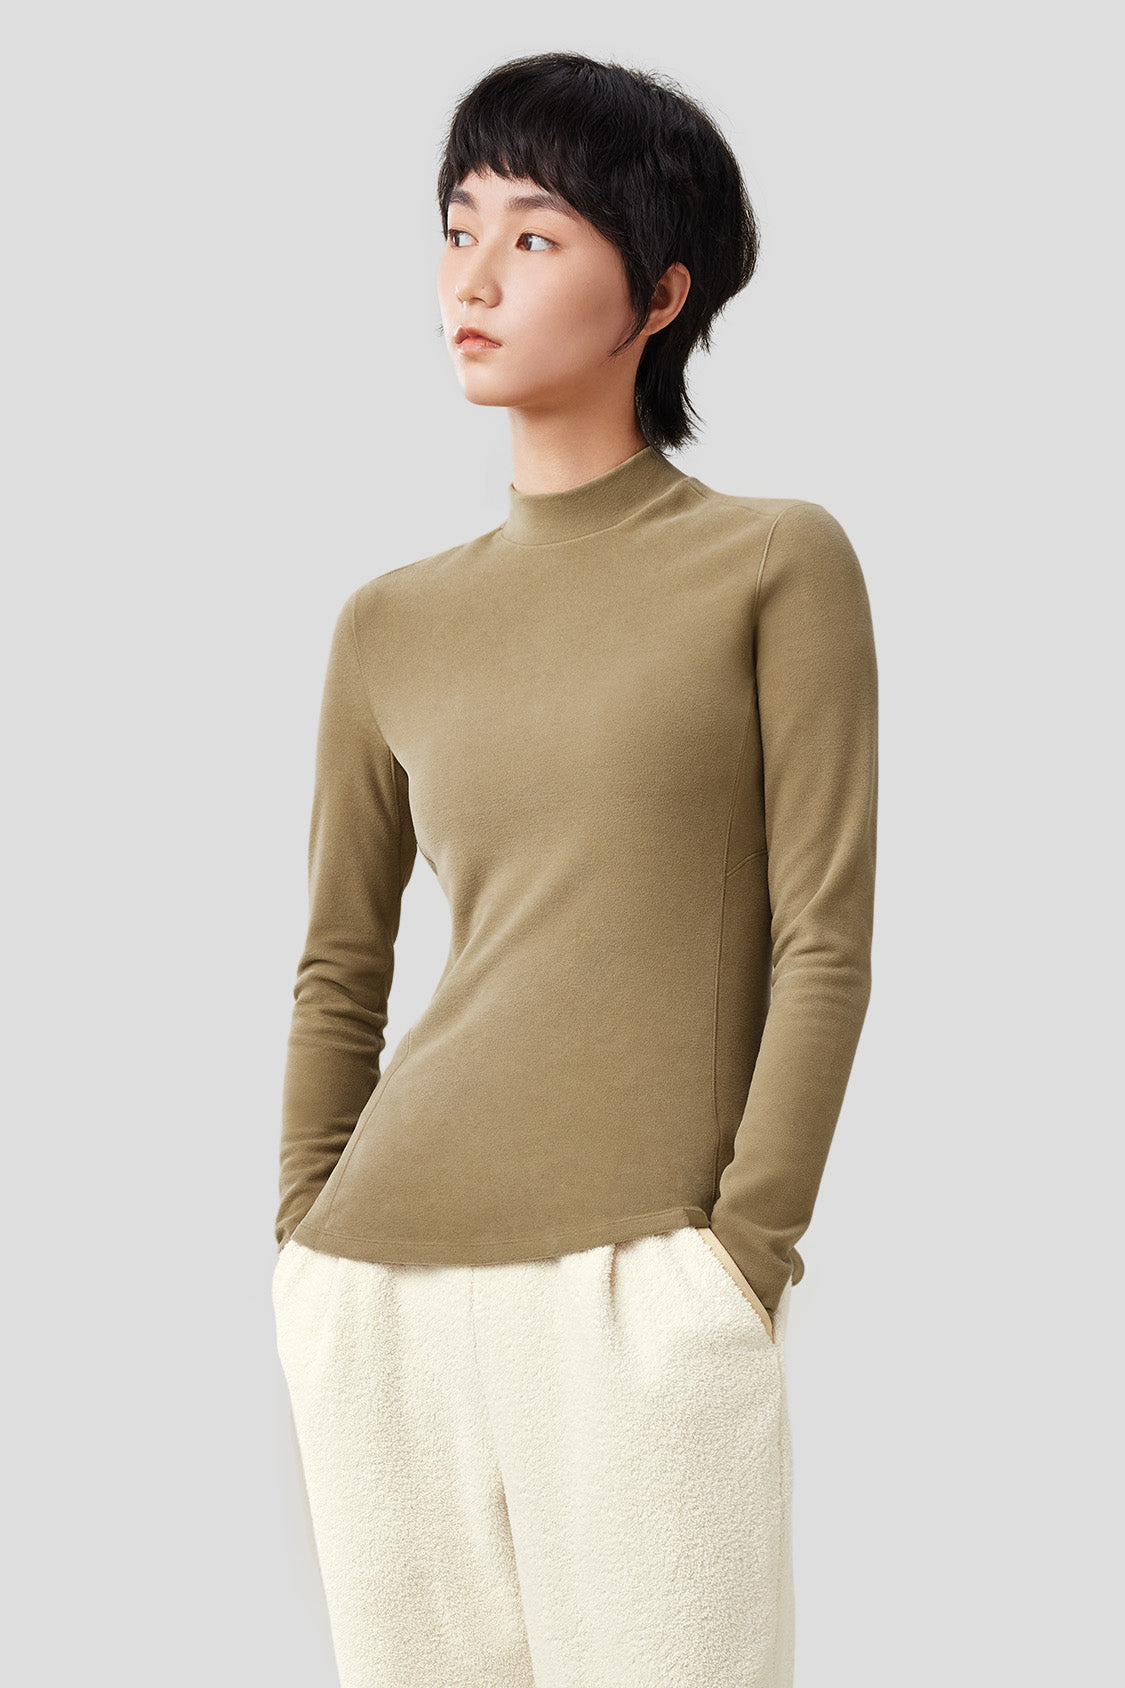 Women's Mid-Warm Half Turtle-Neck Fleece Thermal Shirt